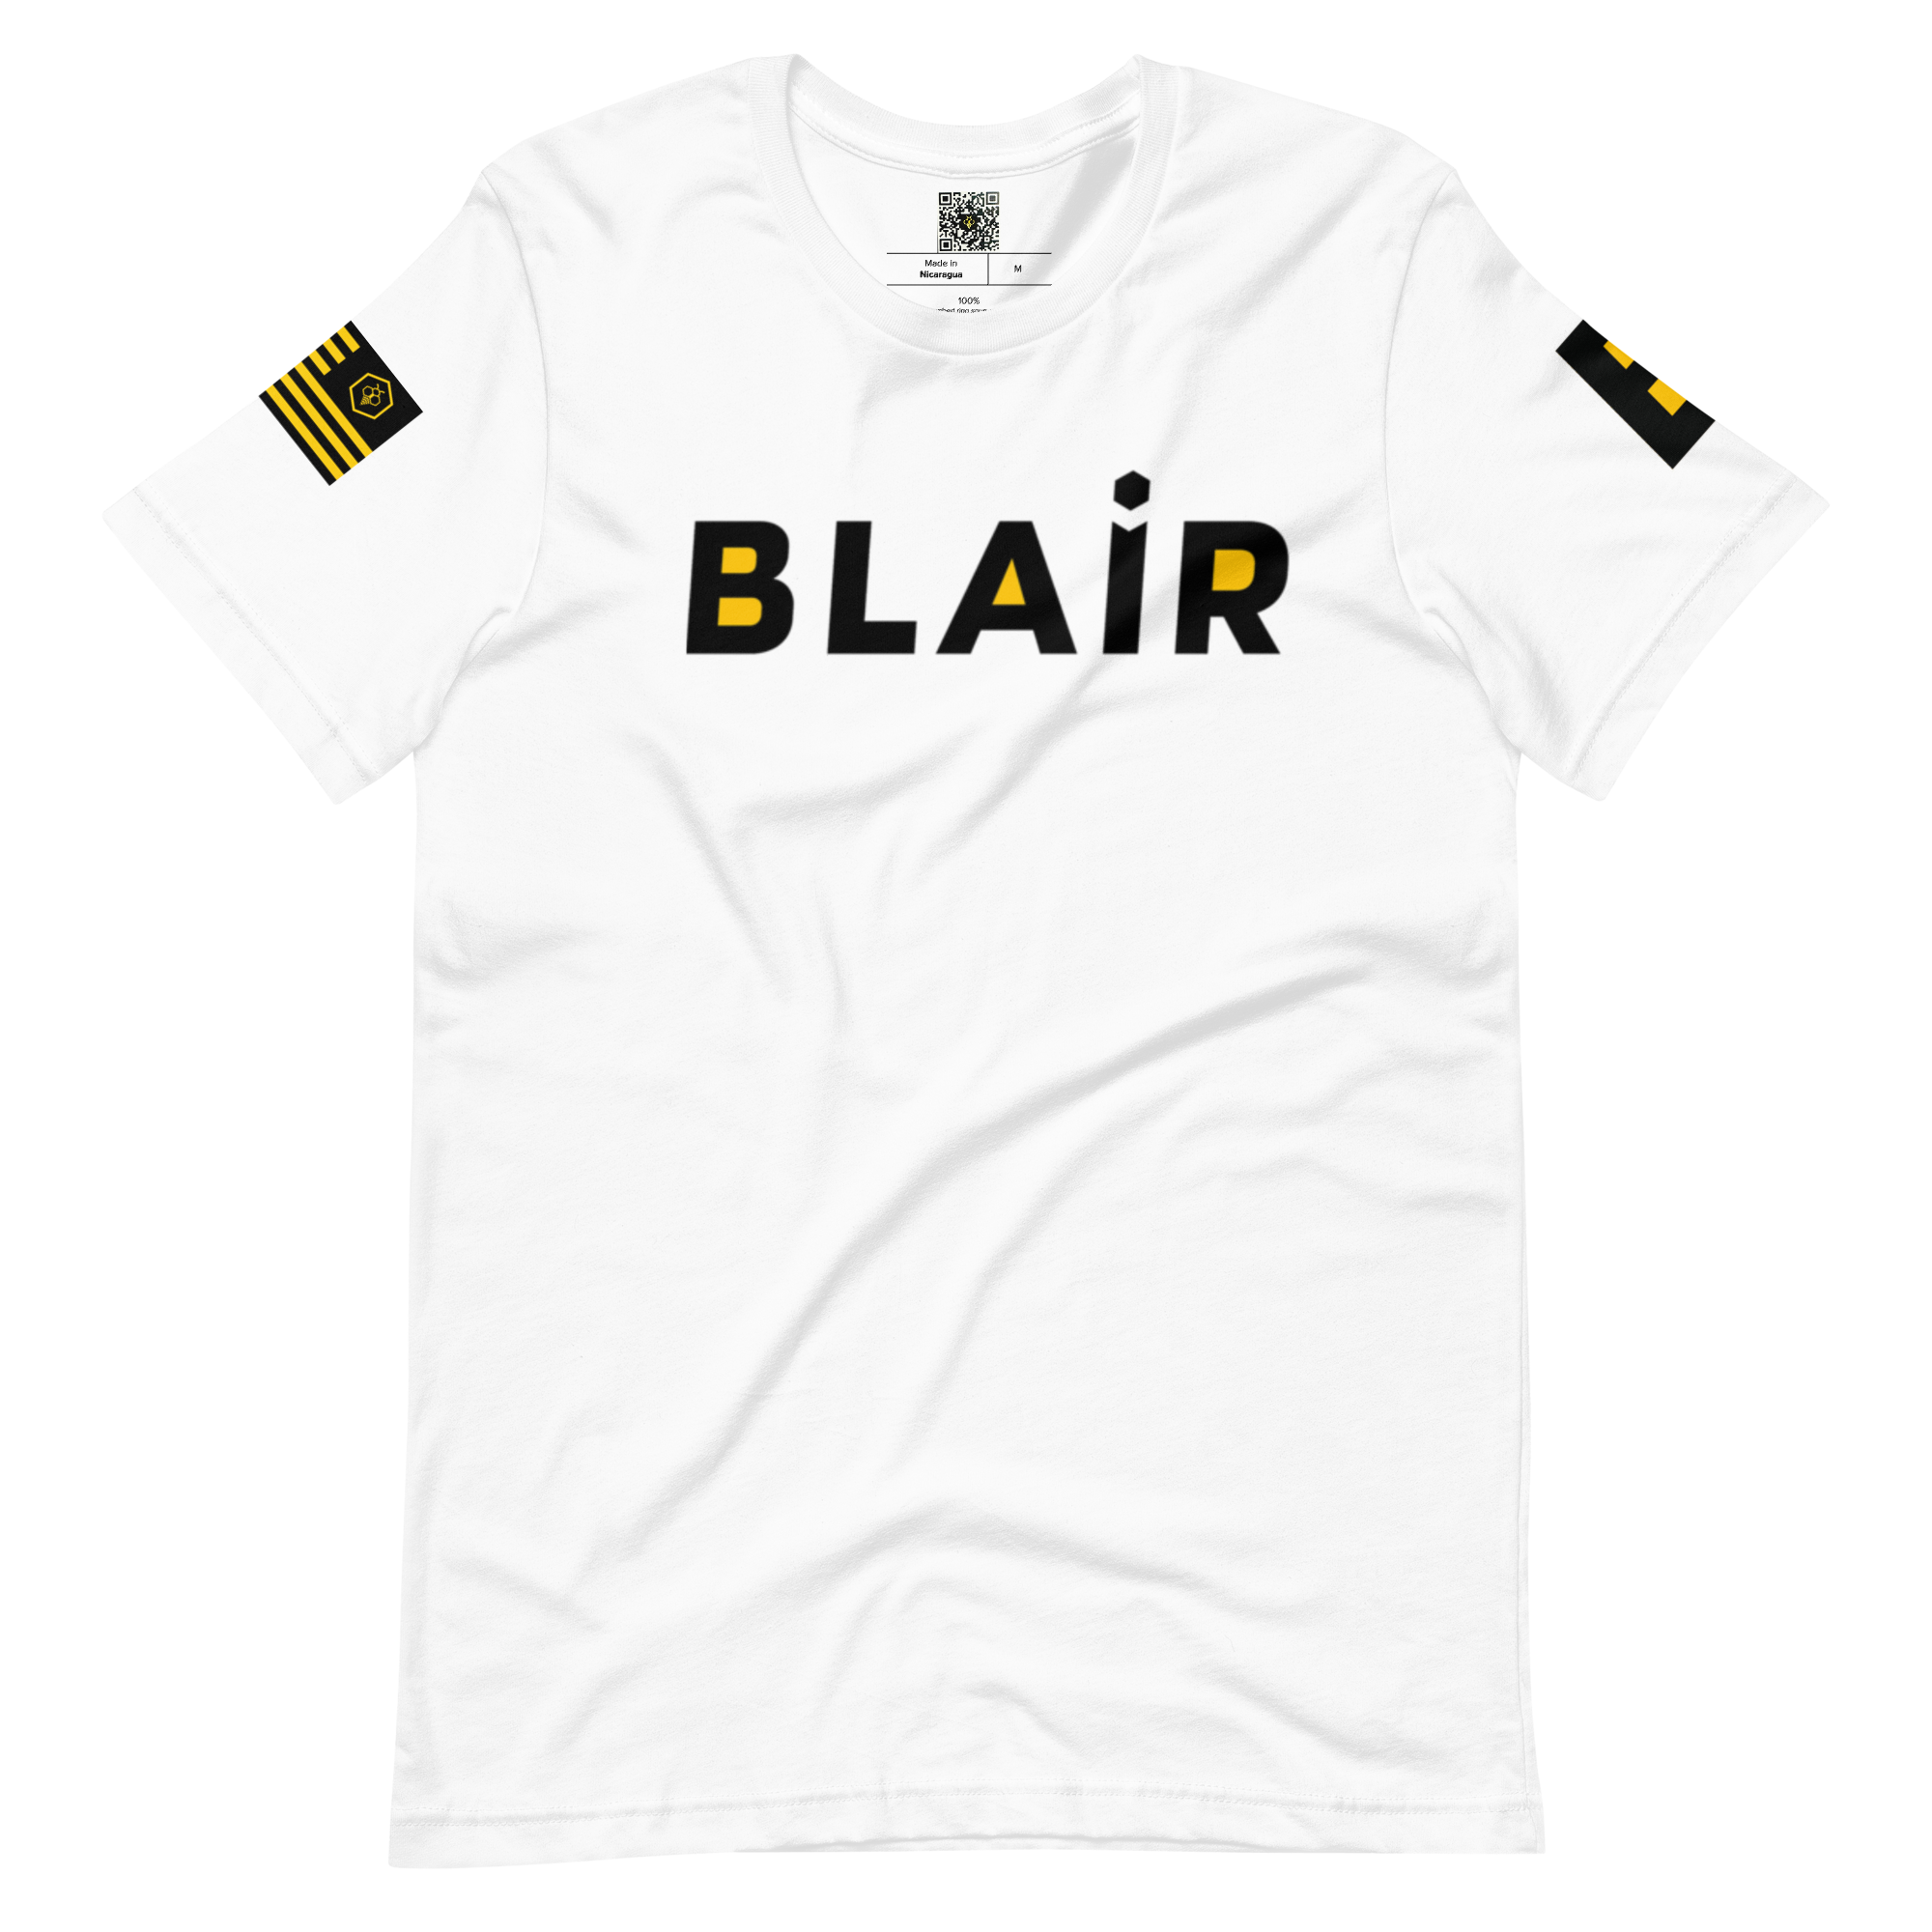 Blair – T-shirt BeLikeJBlair